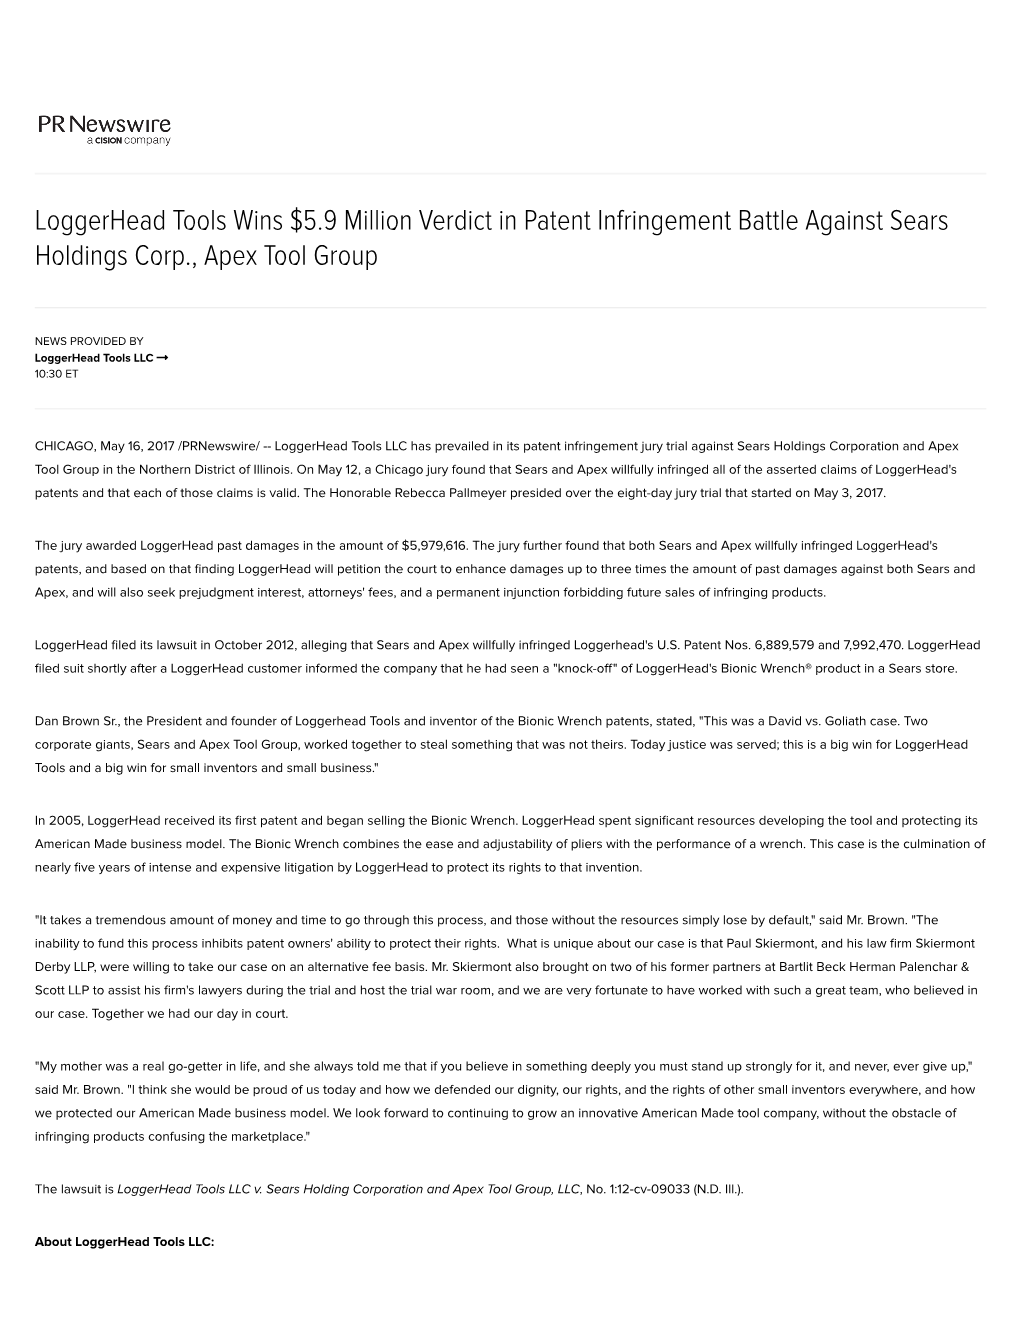 Loggerhead Tools Wins $5.9 Million Verdict in Patent Infringement Battle Against Sears Holdings Corp., Apex Tool Group